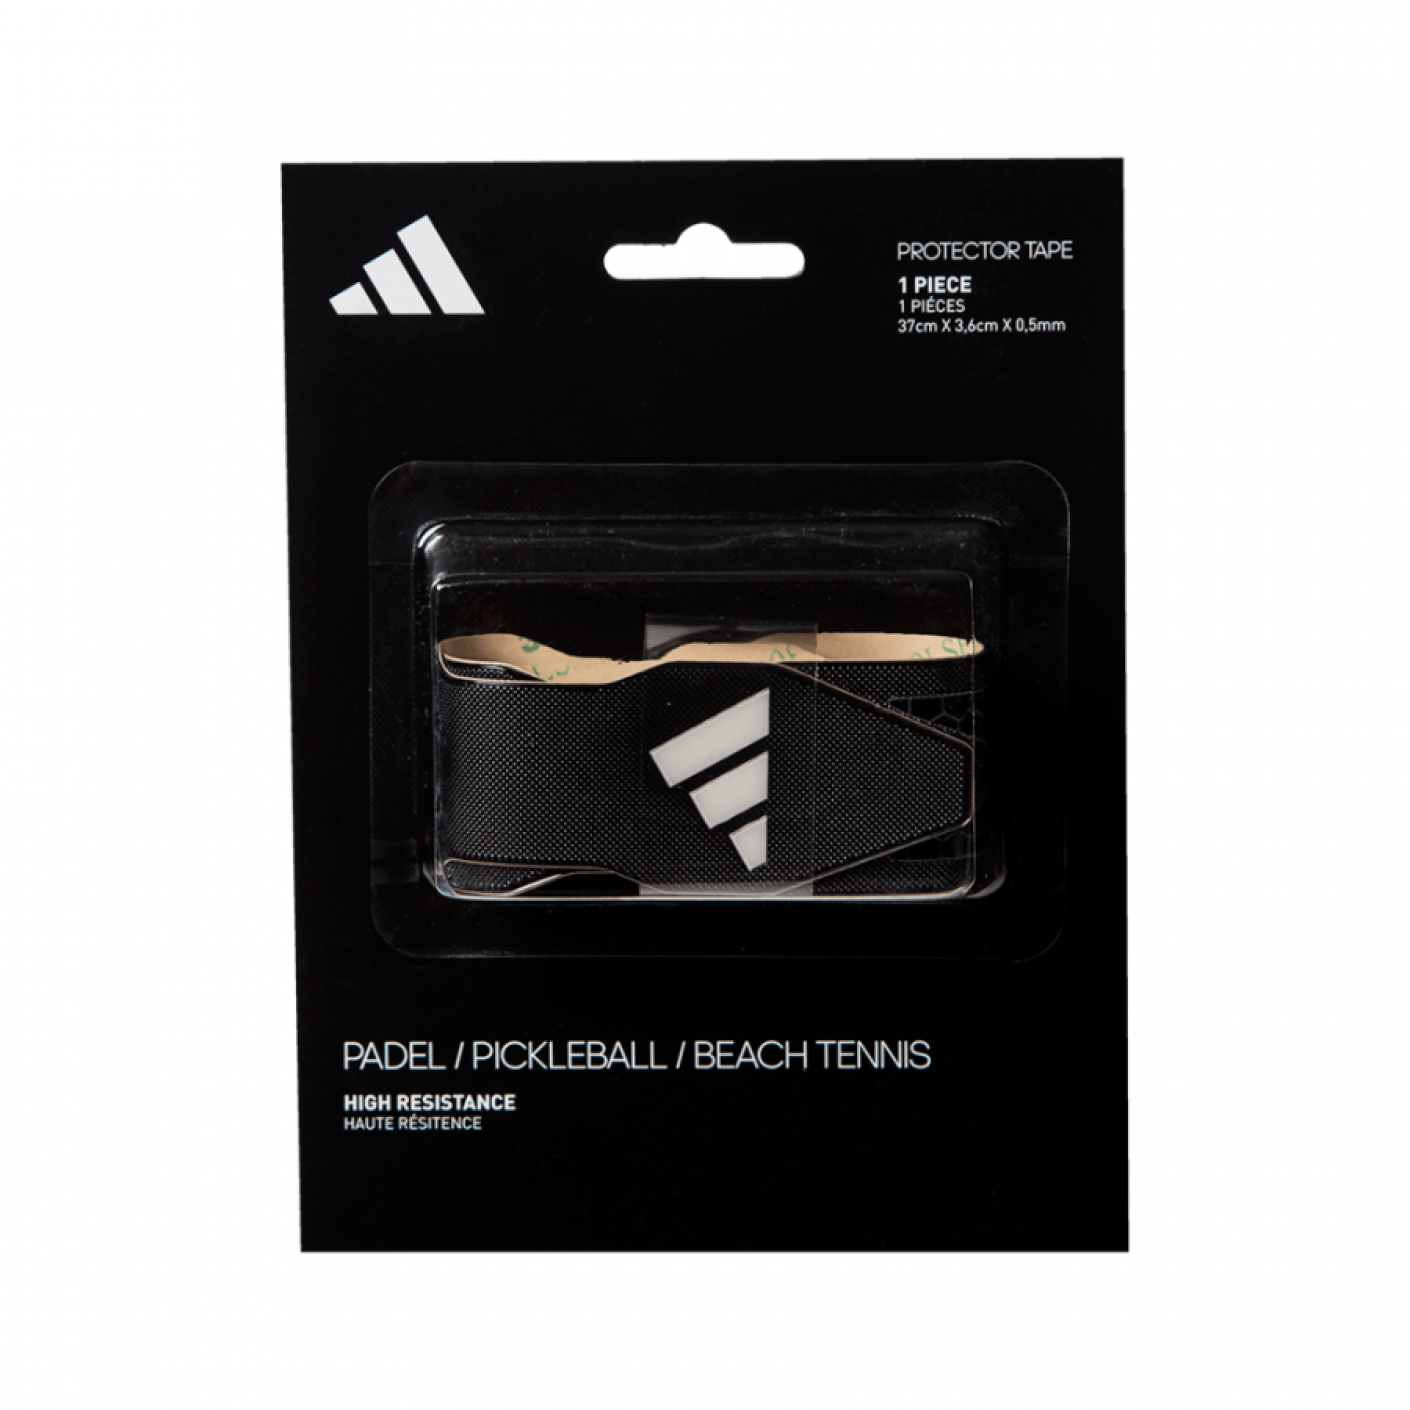 Adidas Antishock Protection Tape Black